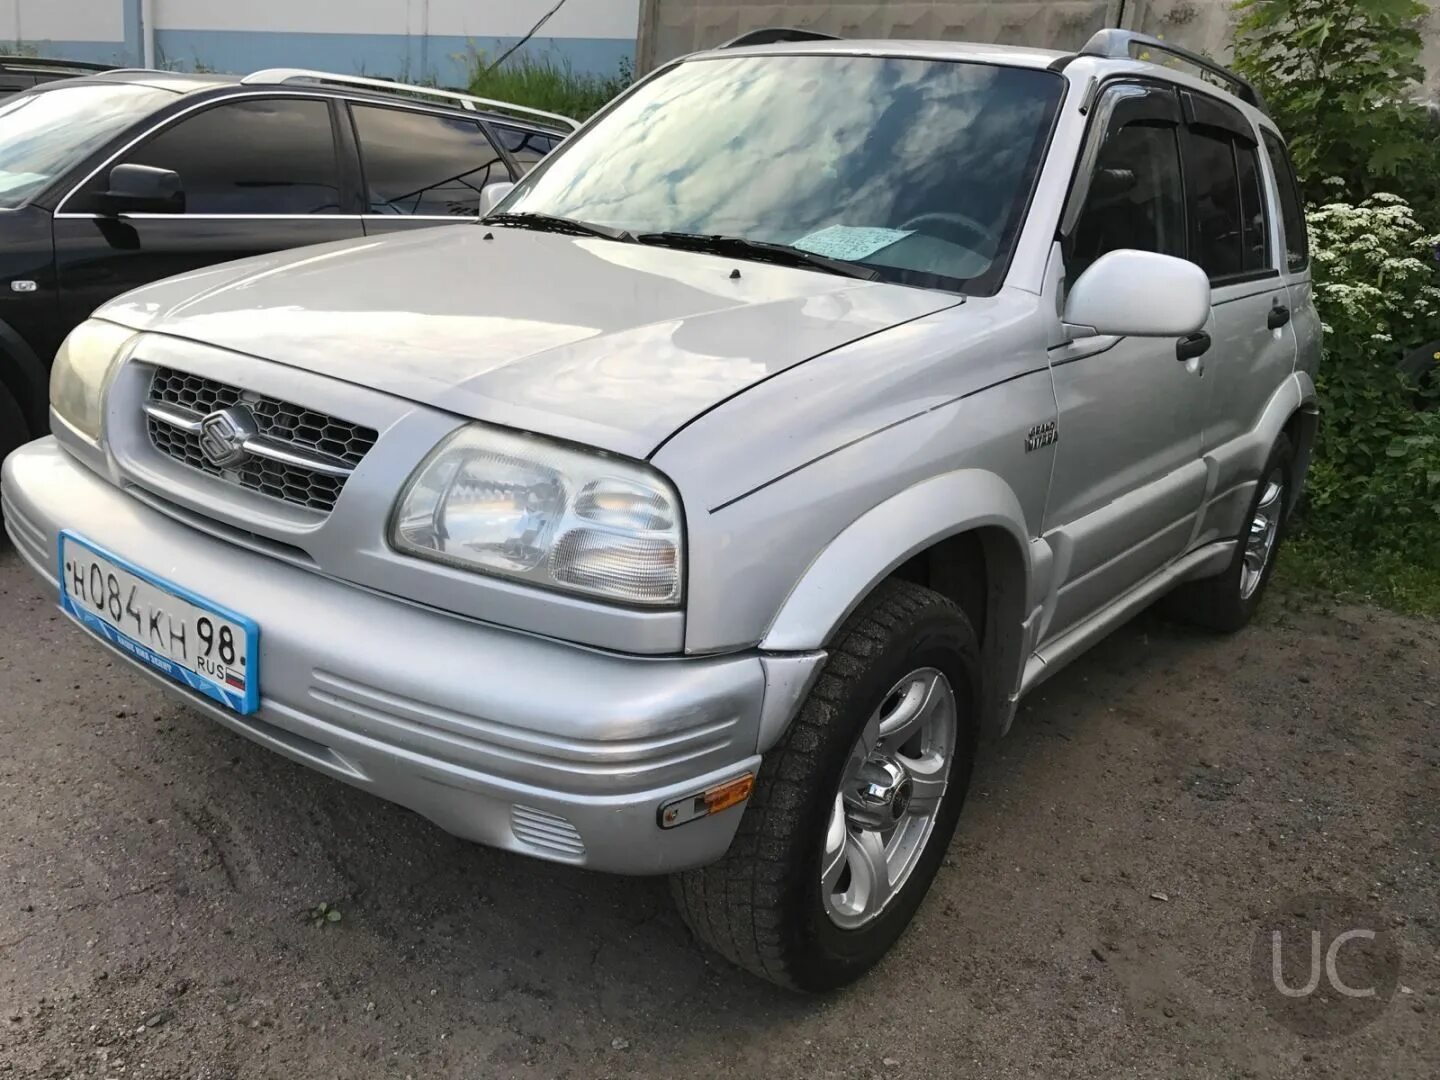 Suzuki grand vitara 2000 год. Suzuki Grand Vitara 2000. Suzuki Grand Vitara 2000 года. Гранд Витара 2000 года. Судзуки Гранд Витара 2000.